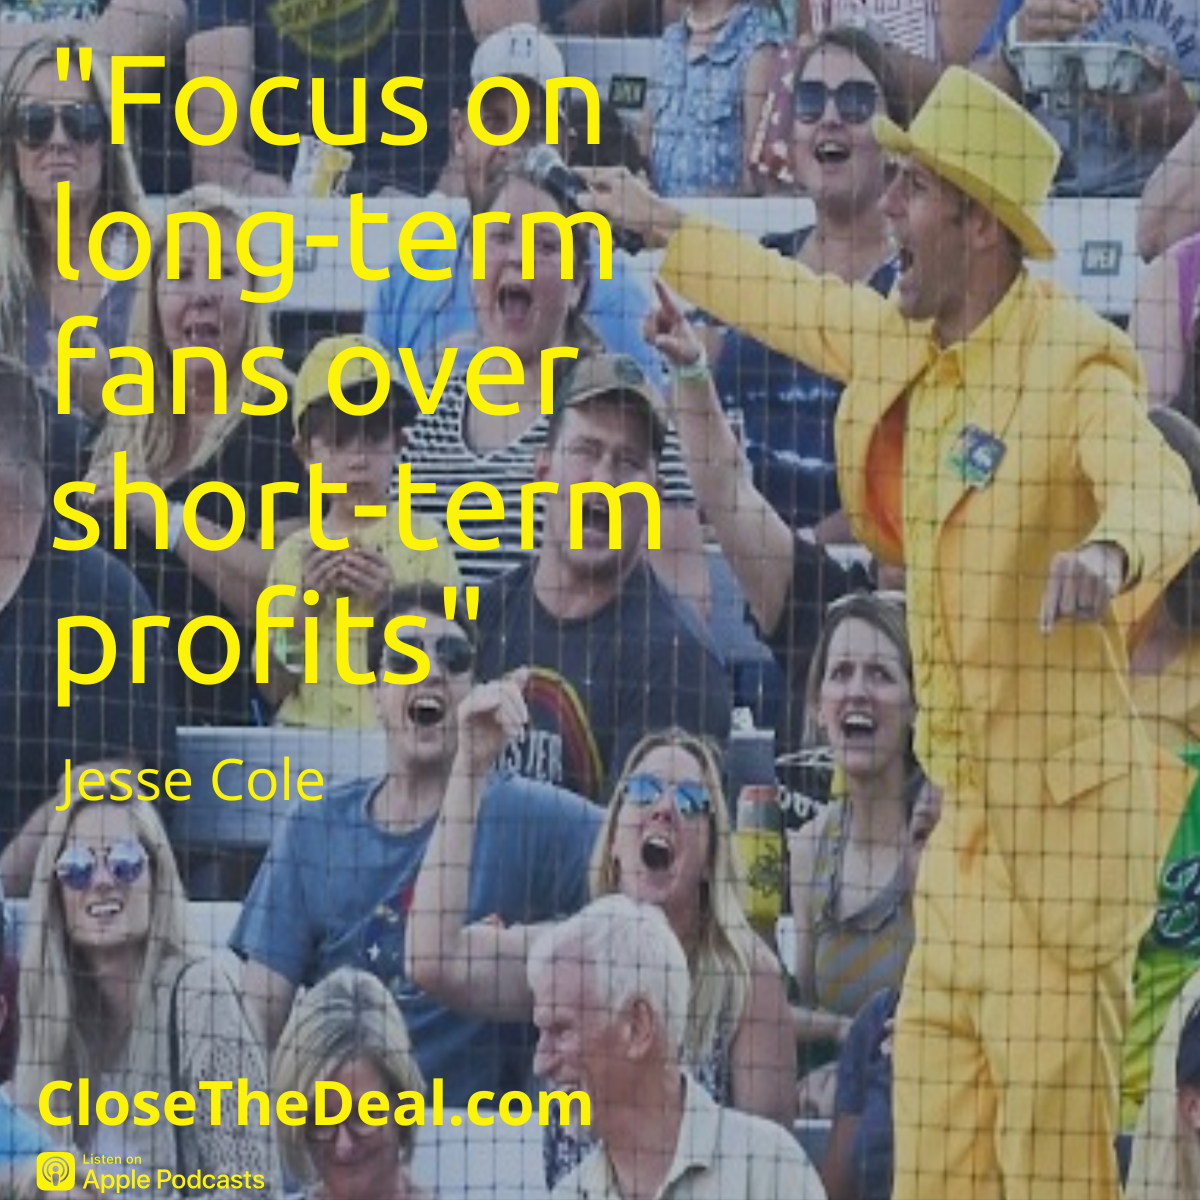 Jesse COle quote  Close The Deal.com